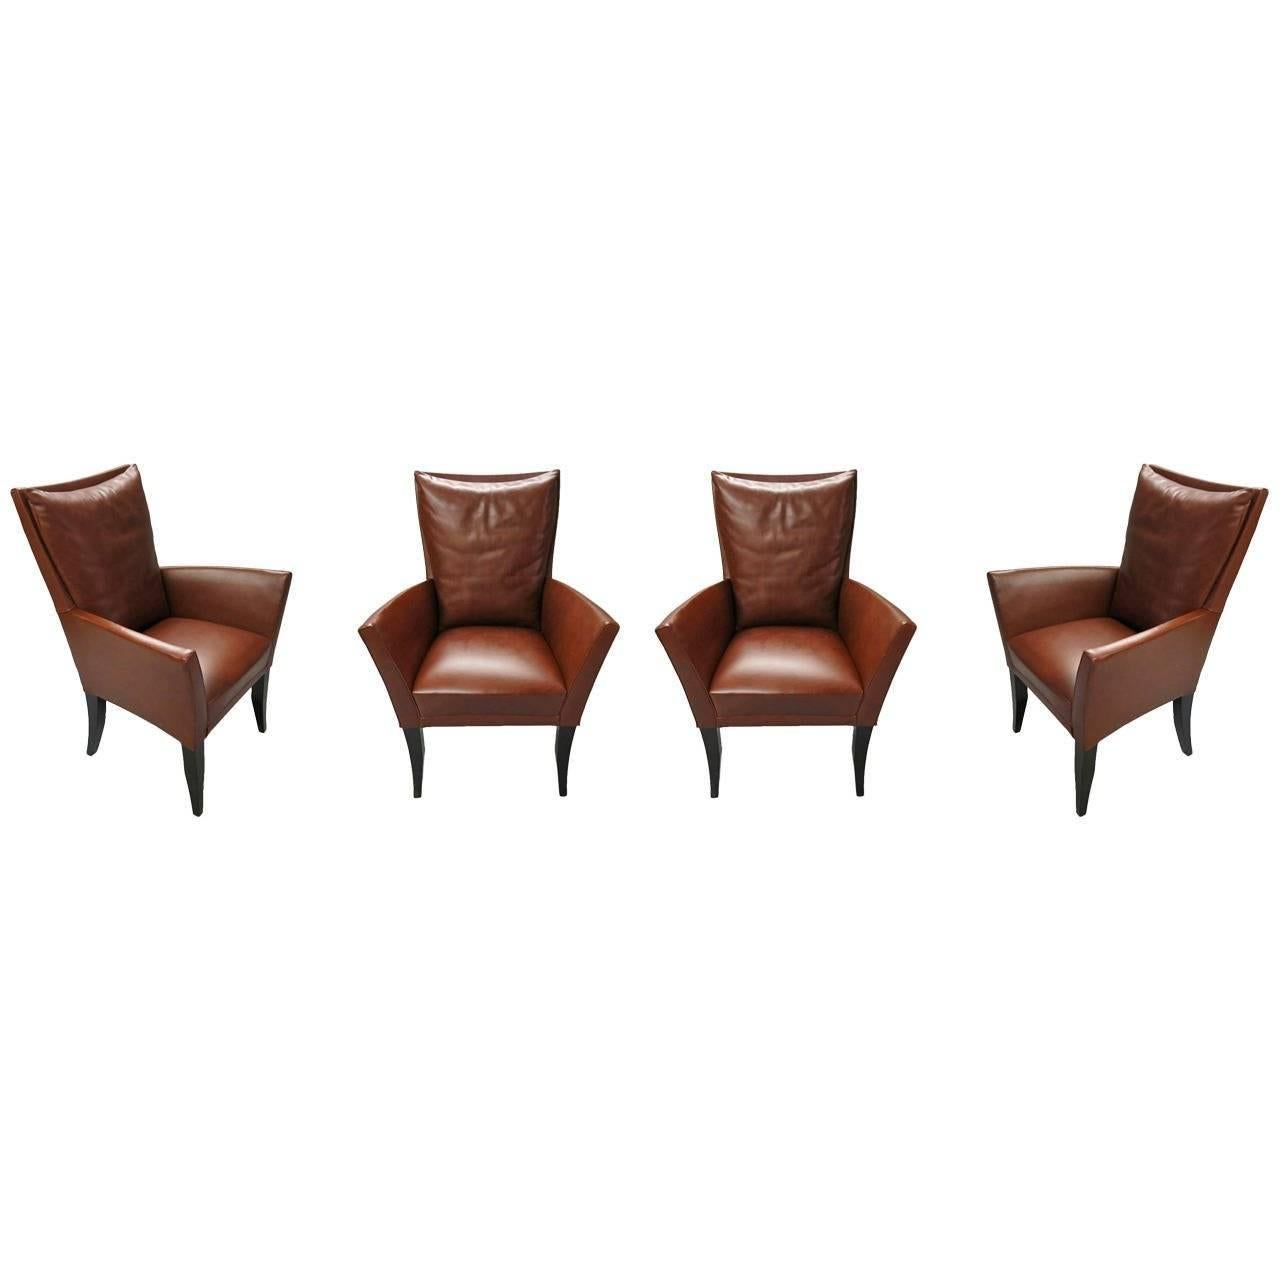 Four Leather Armchairs by Dakota Jackson, USA, 1990s